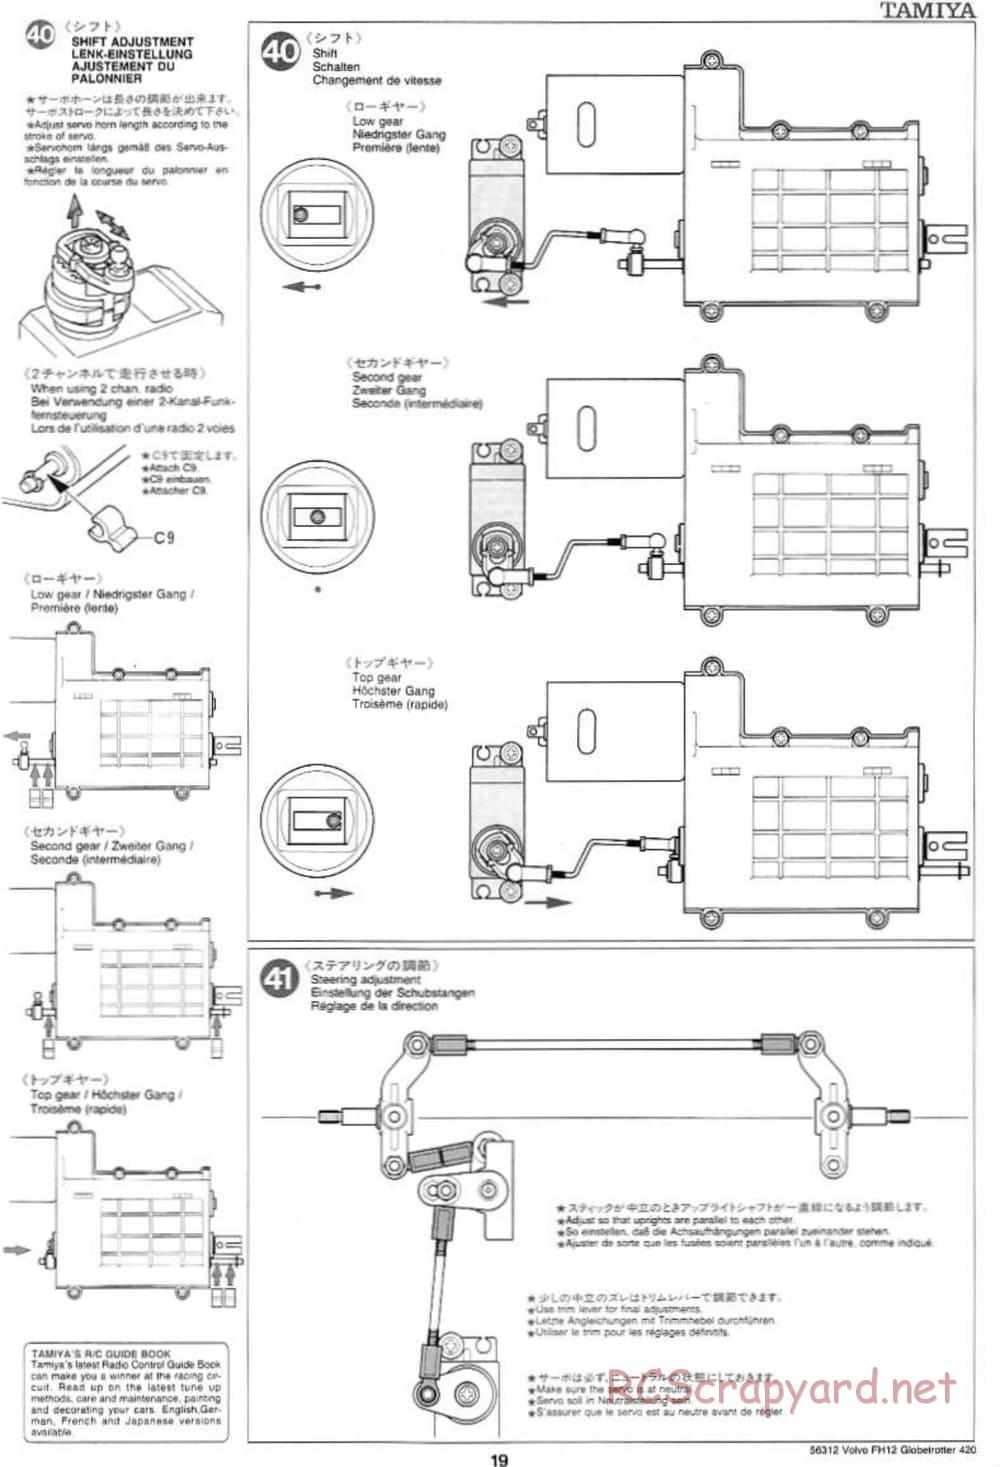 Tamiya - Volvo FH12 Globetrotter 420 - Manual - Page 19